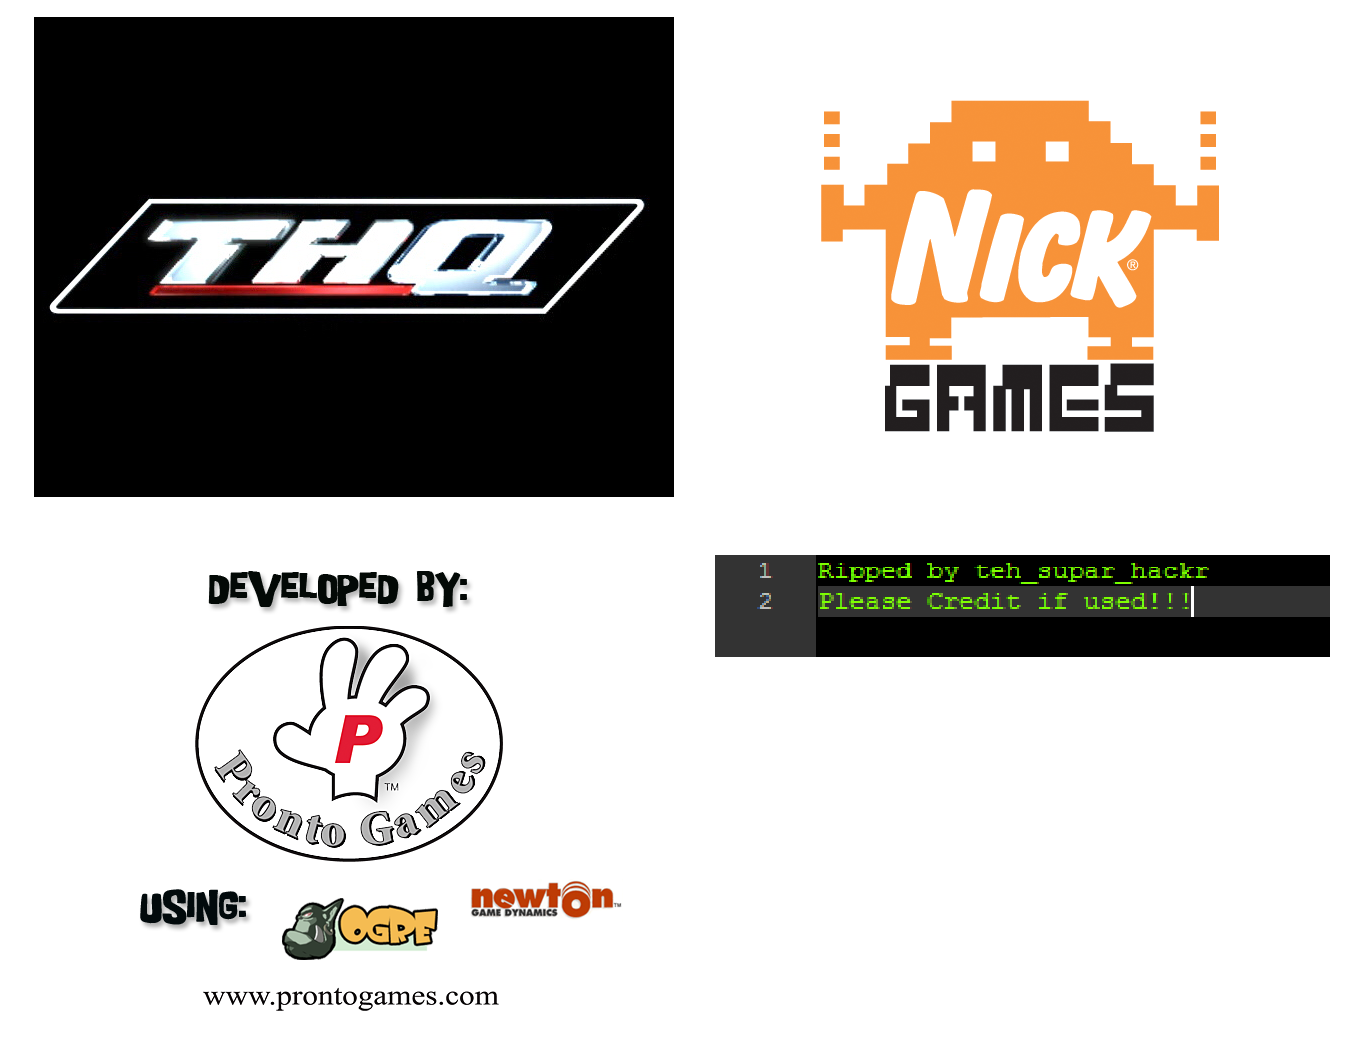 Nicktoons Winners Cup Racing - Logos